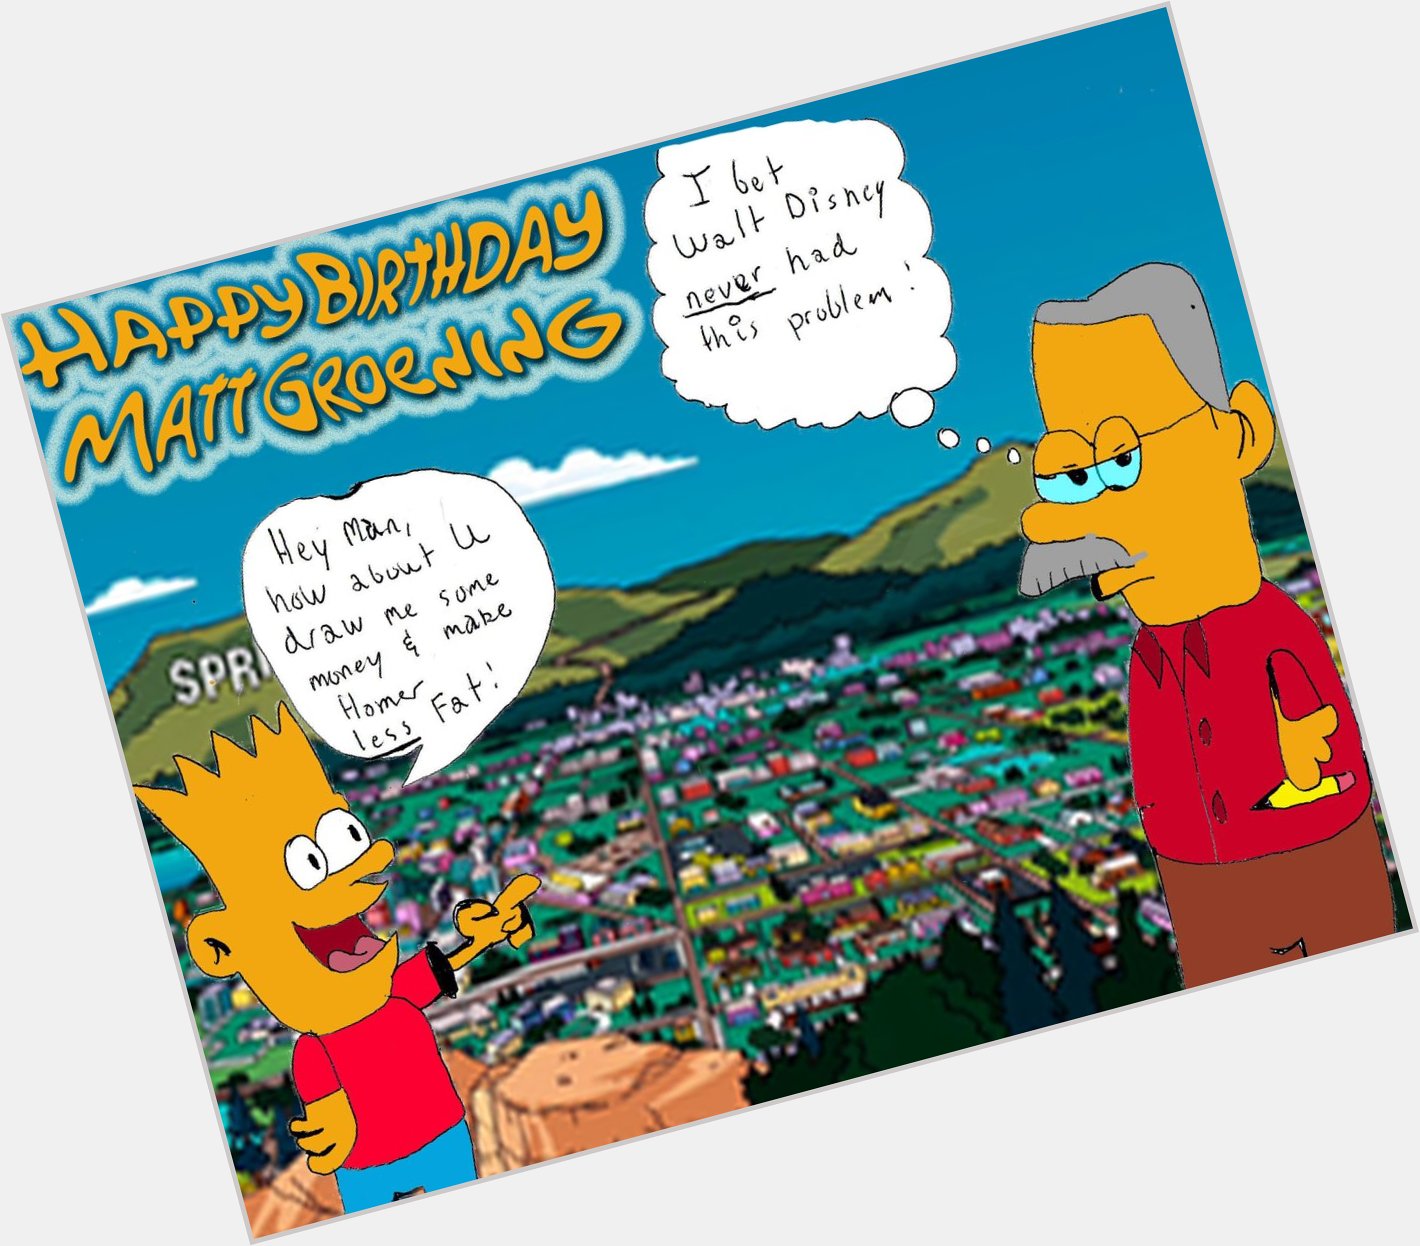 I may be late but, Happy ______ Birthday Matt Groening!!!  